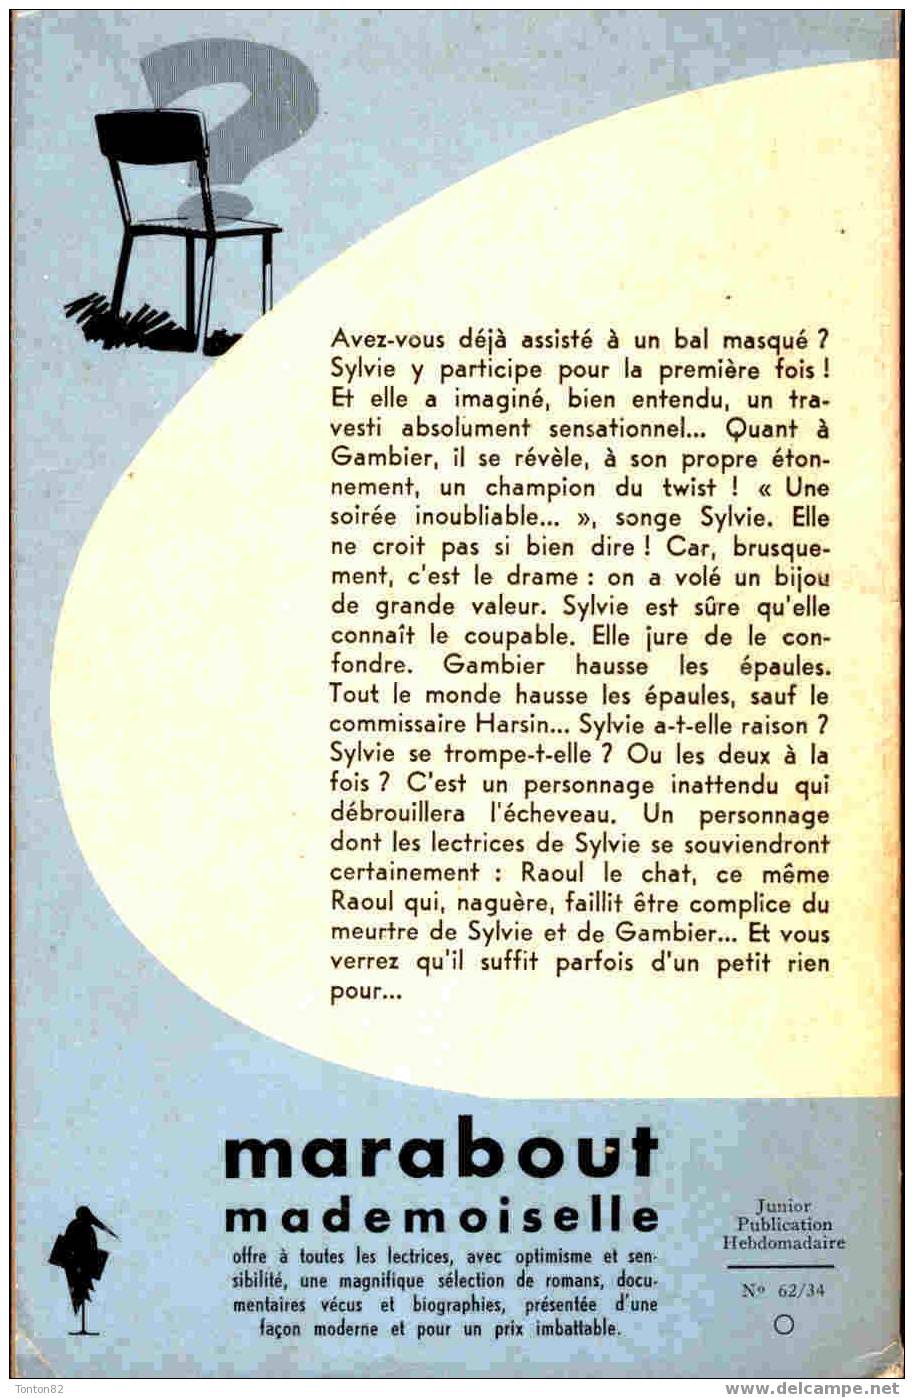 Marabout " Mademoiselle " N° 153 - Sylvie N´aime Pas Le Chewing-gum - René Philippe - Marabout Junior